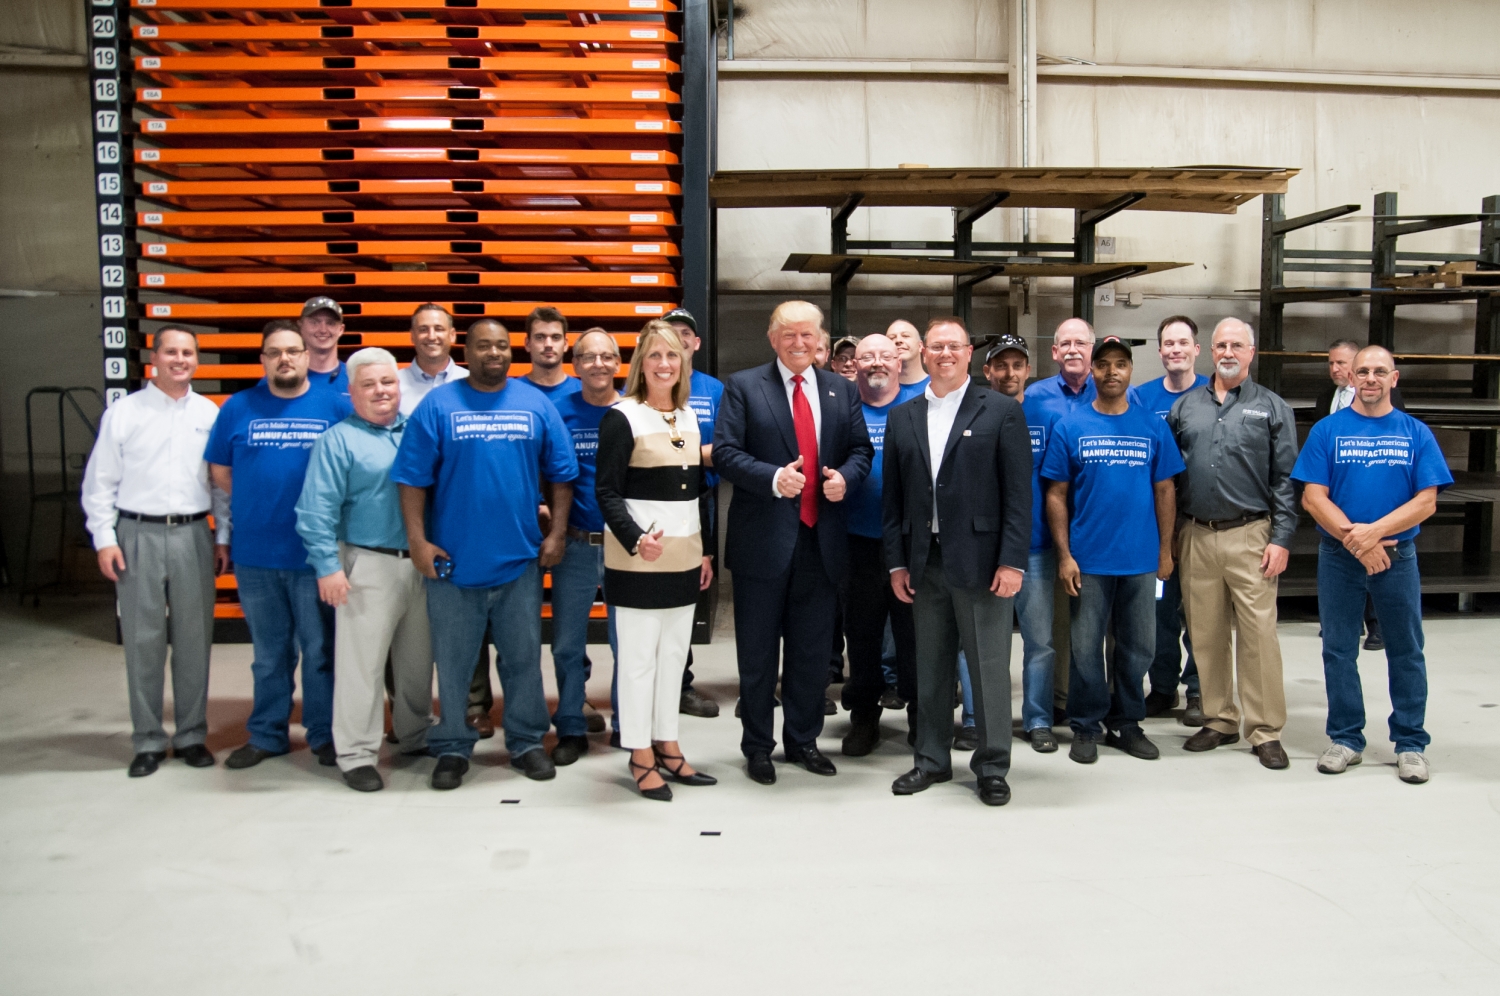 Donald Trump visits Staub Manufacturing